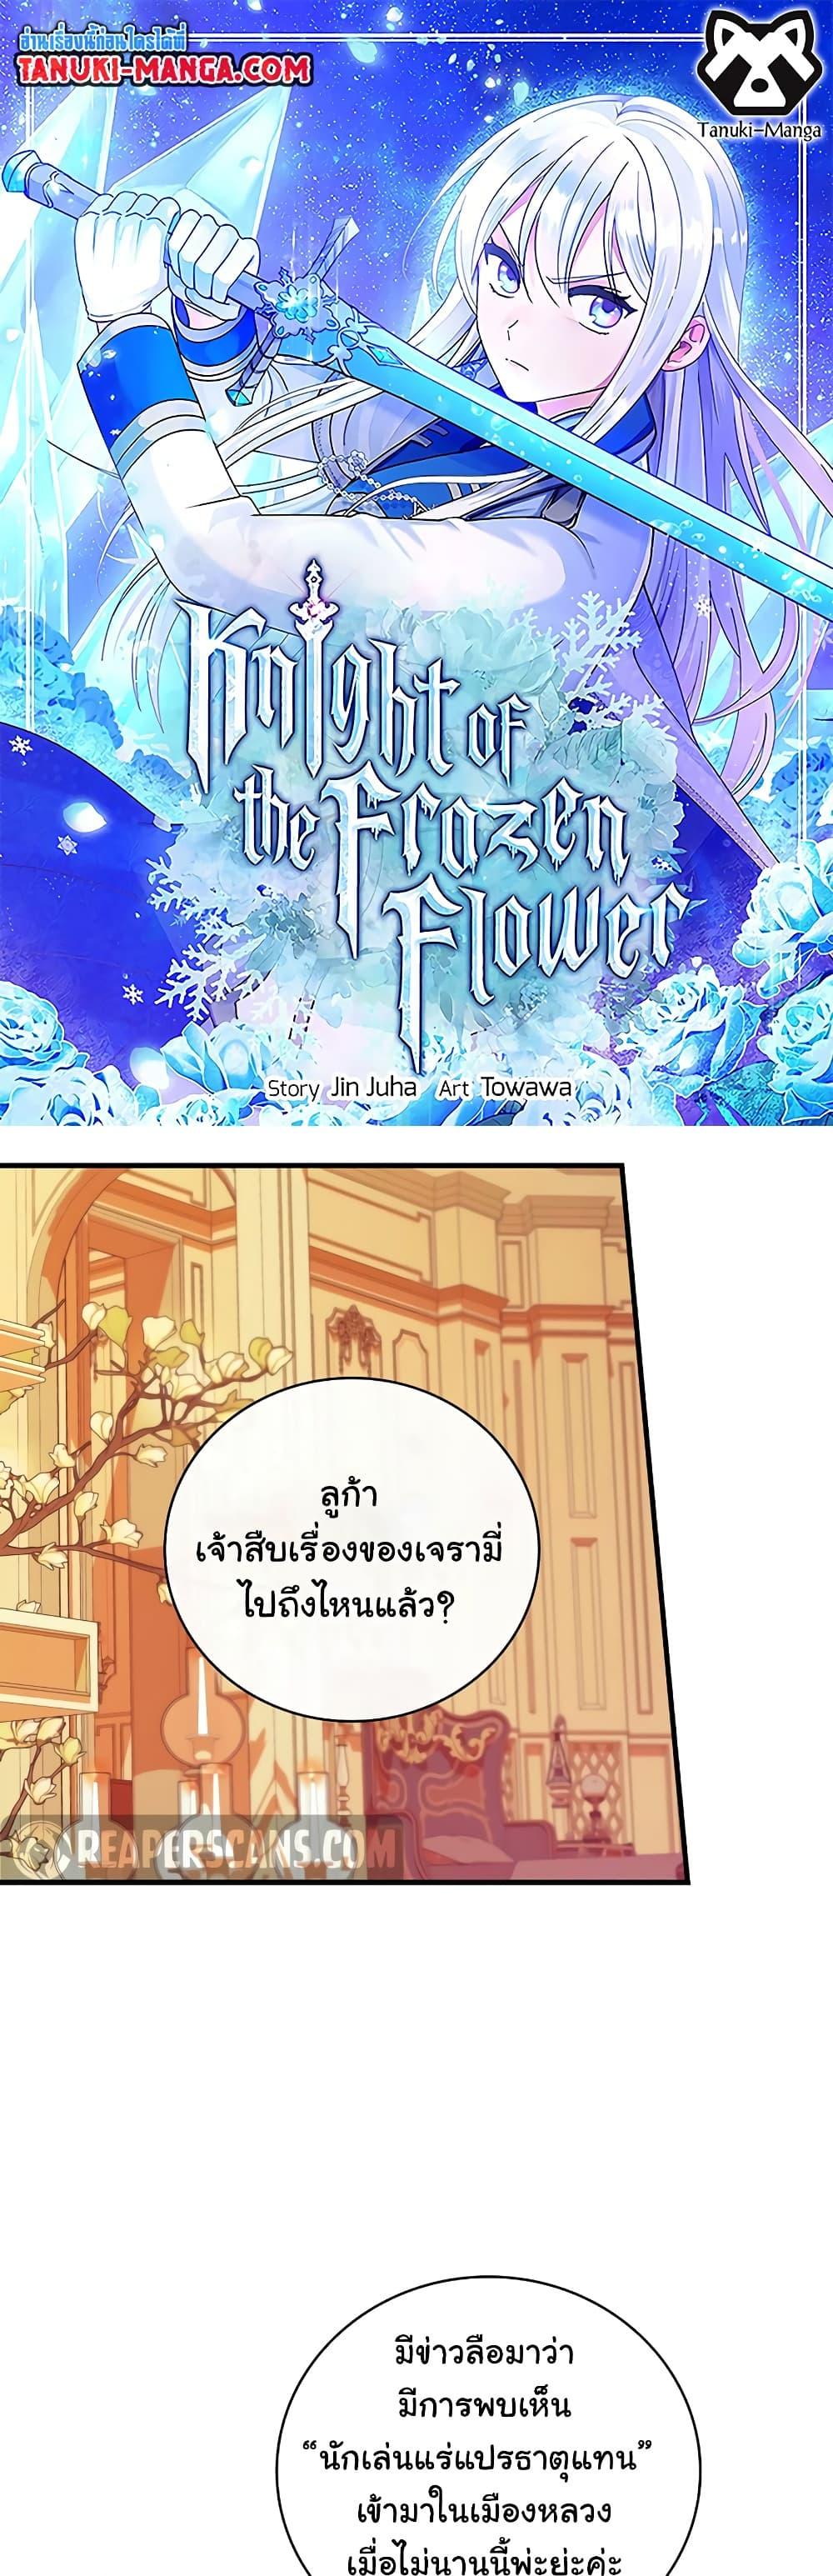 Knight of the Frozen Flower ตอนที่ 52 (1)